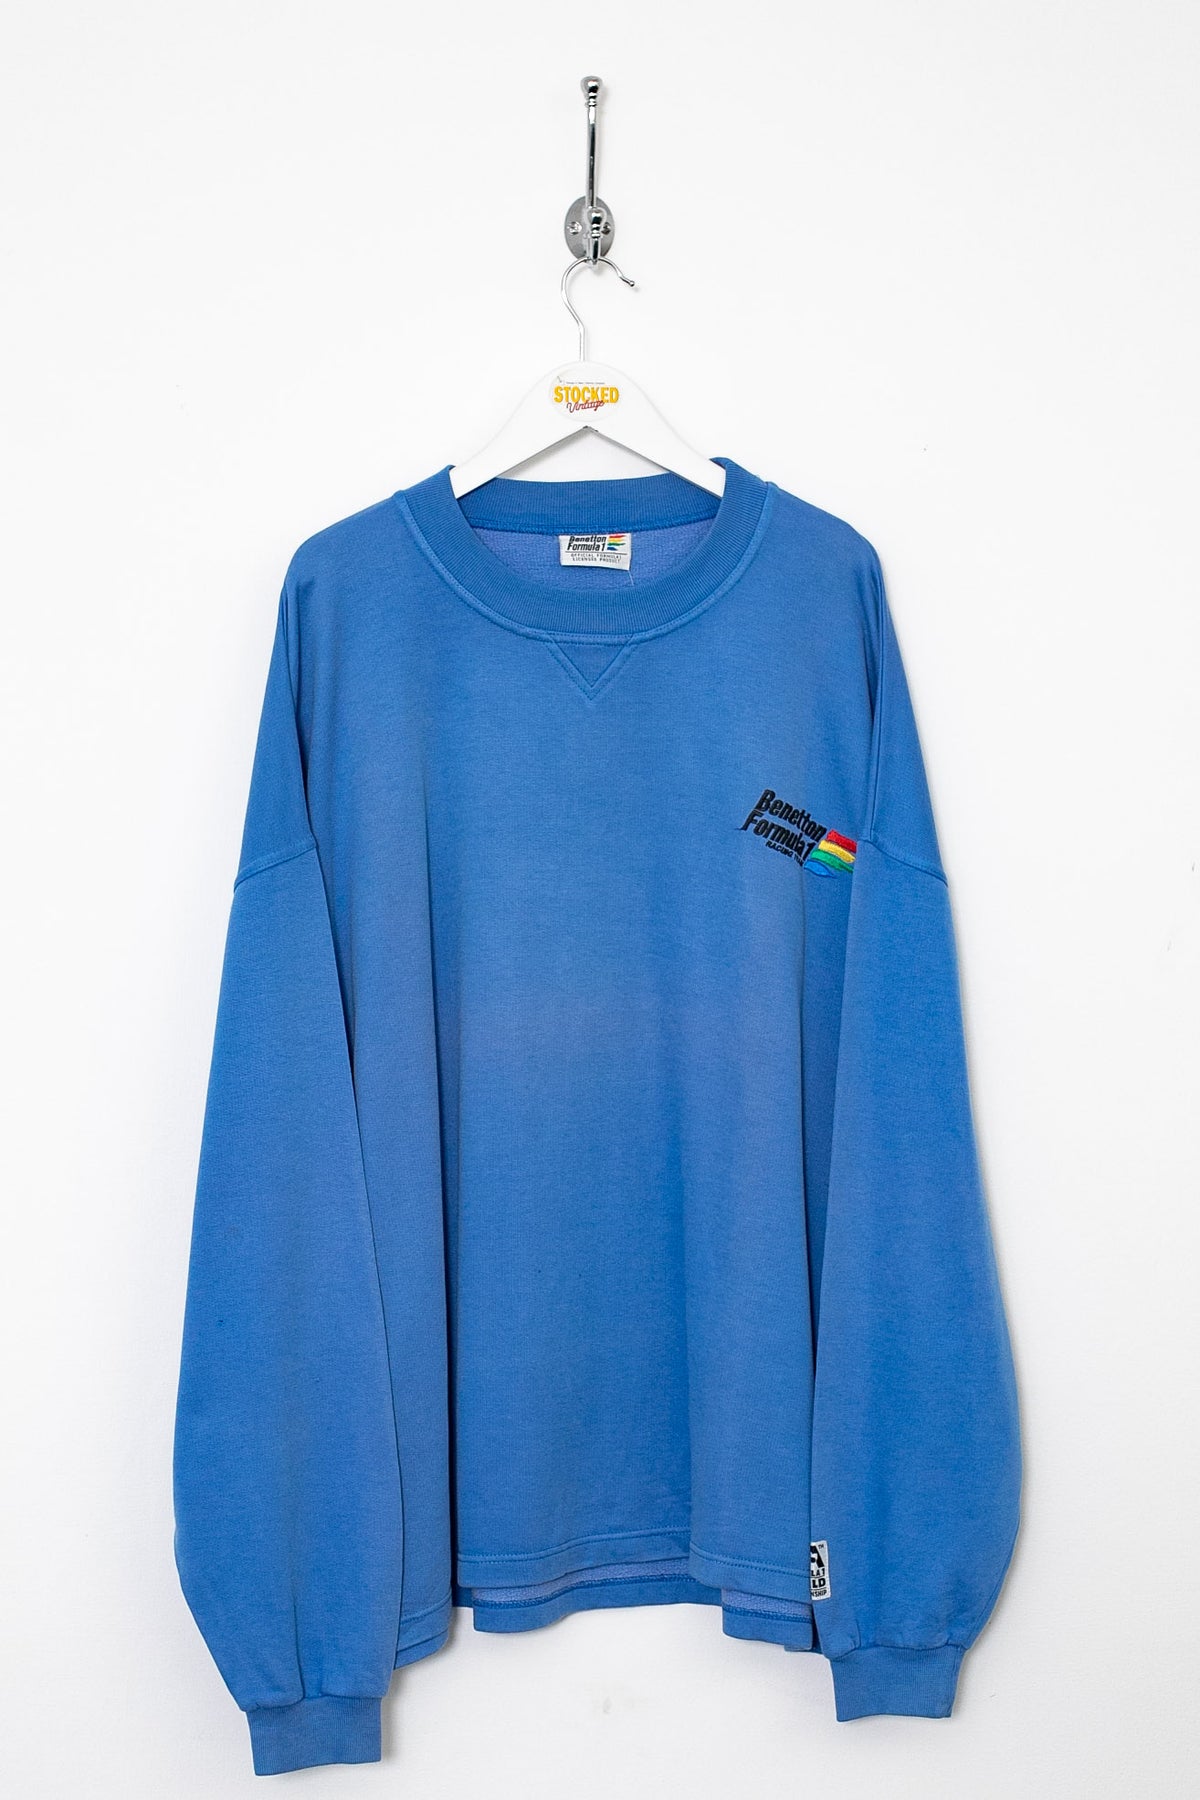 90s Benetton Formula One Sweatshirt (XL)